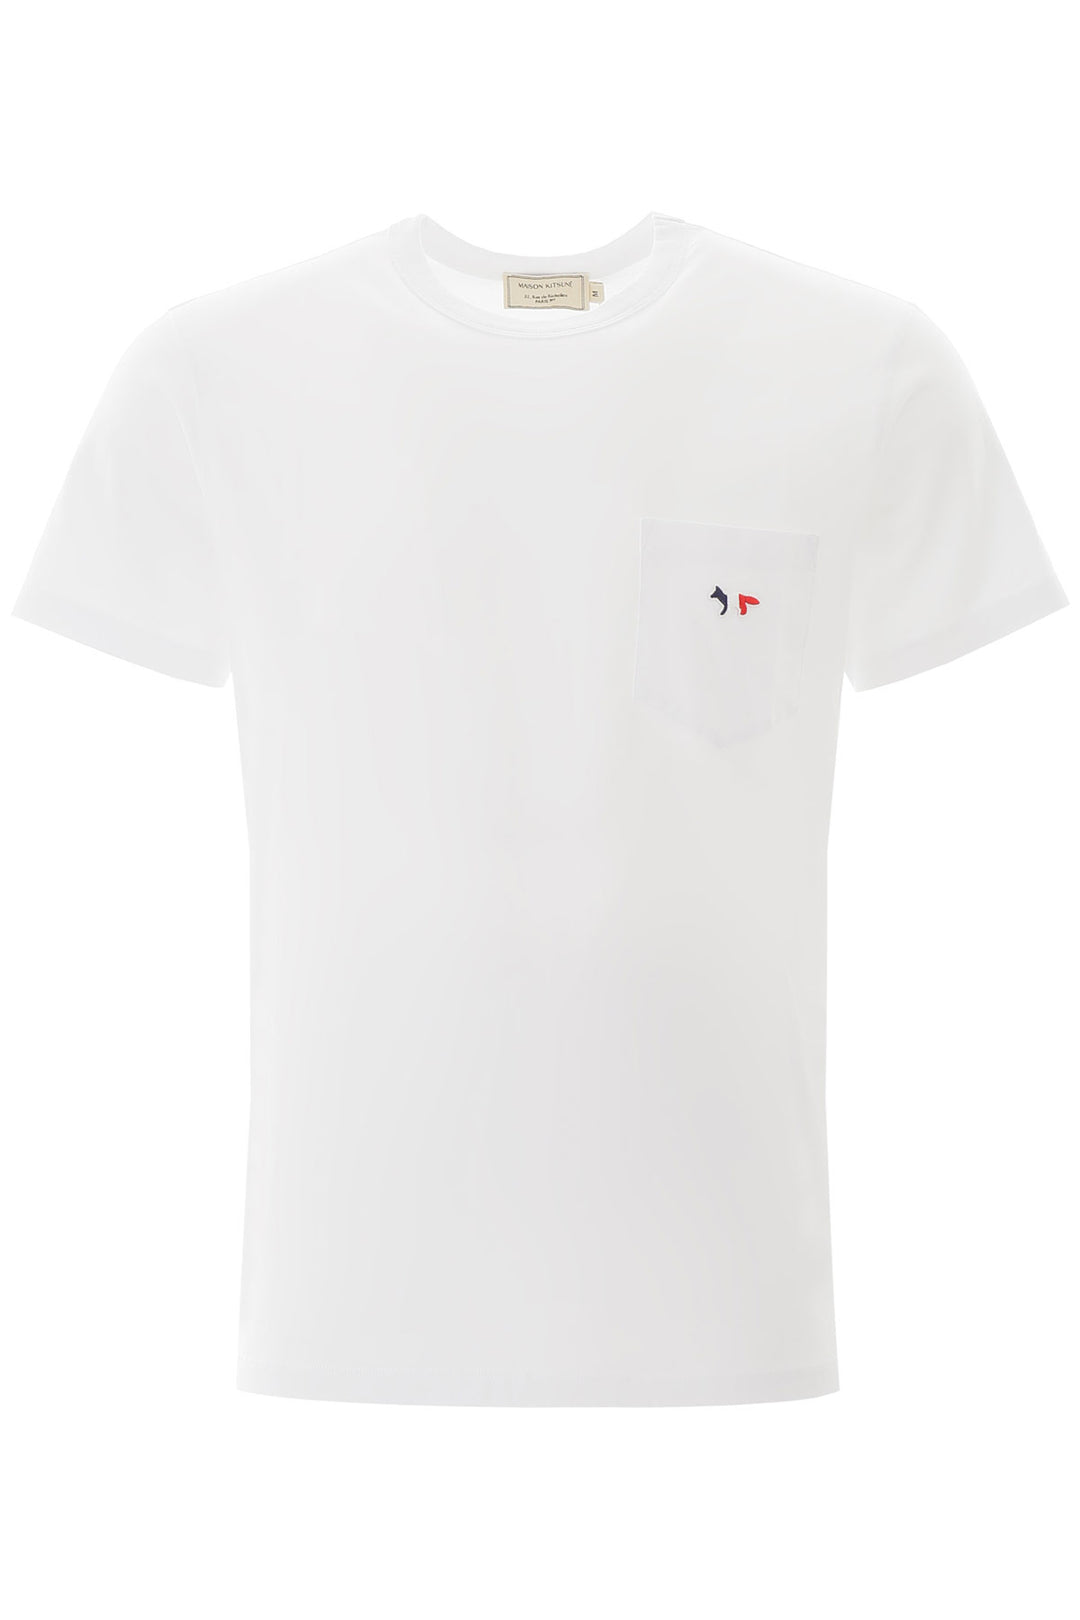 T Shirt Taschino Volpe Tricolore - Maison Kitsune - Uomo